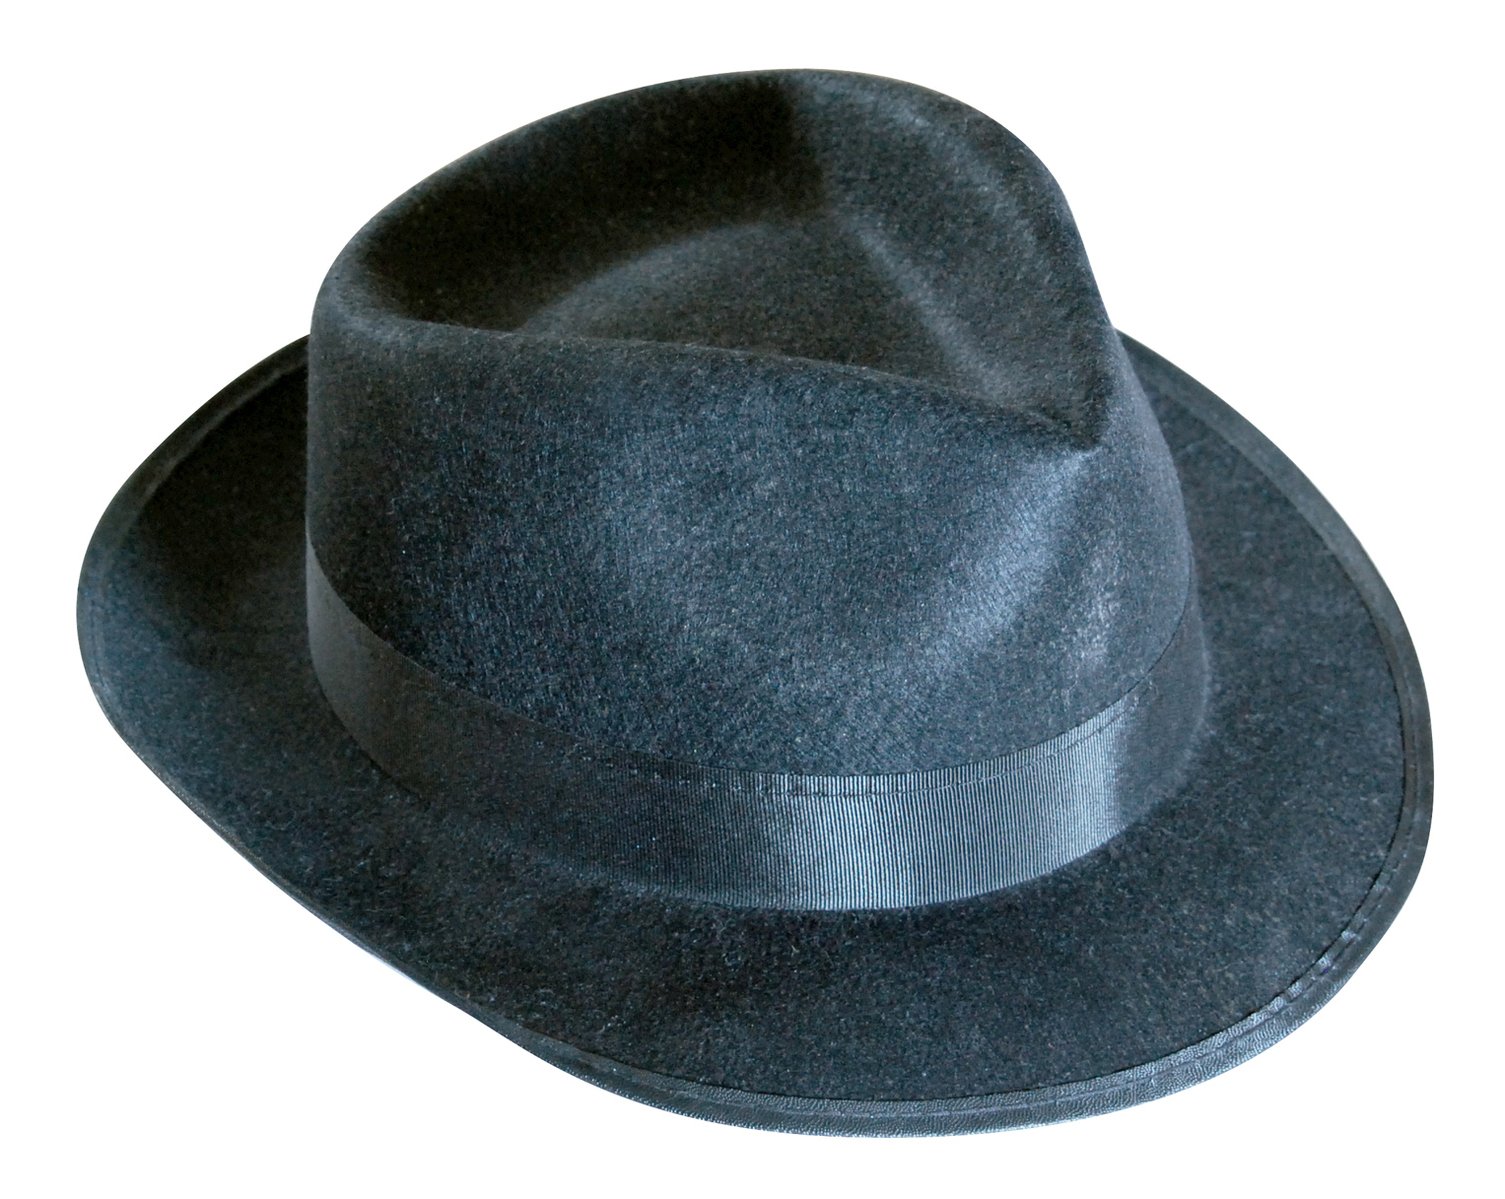 A black hat